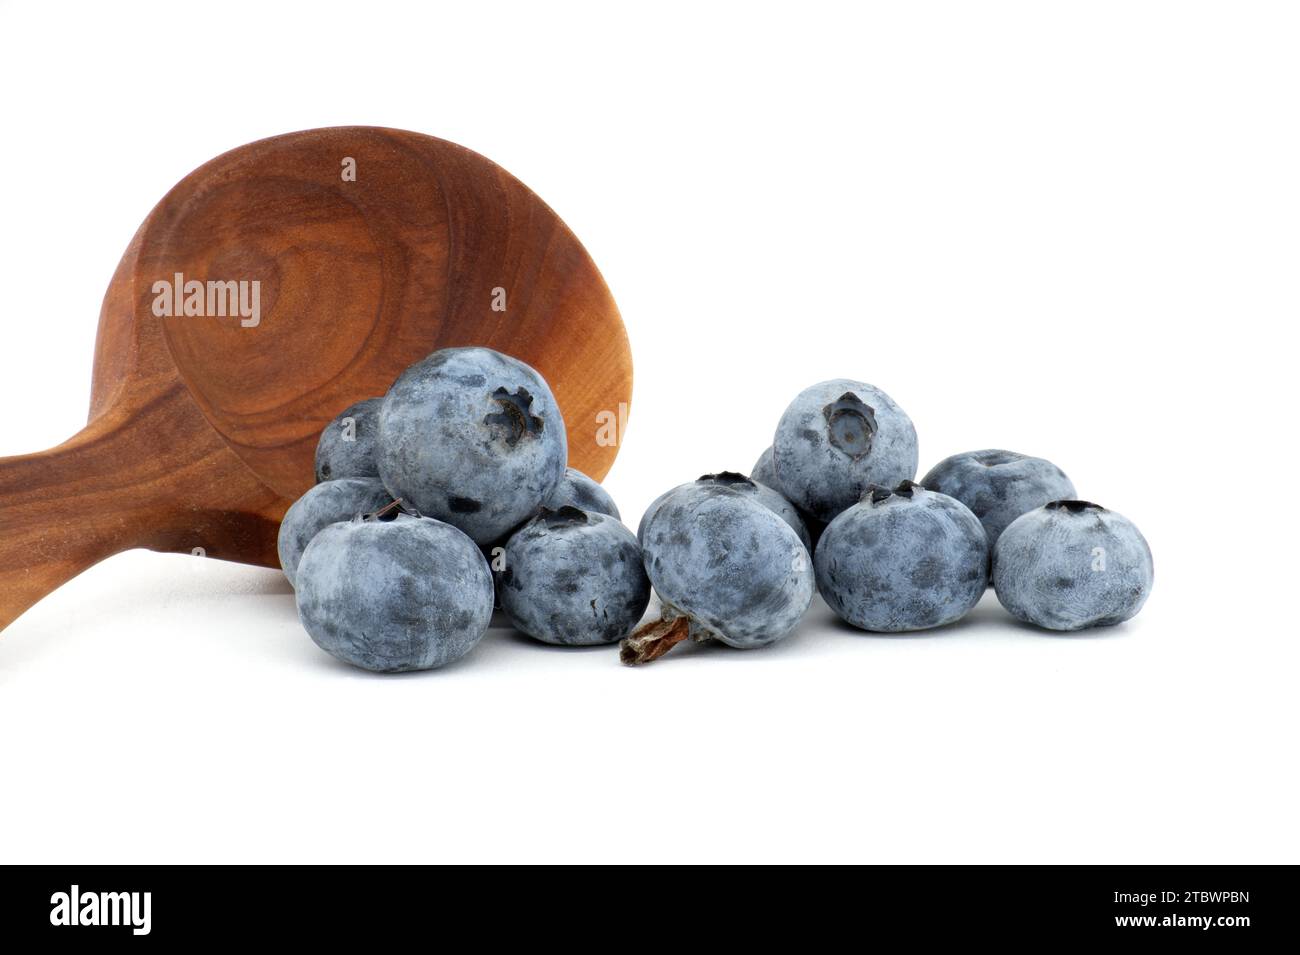 Heap of fresh blueberries isolated on white background, full depth of field Stock Photo